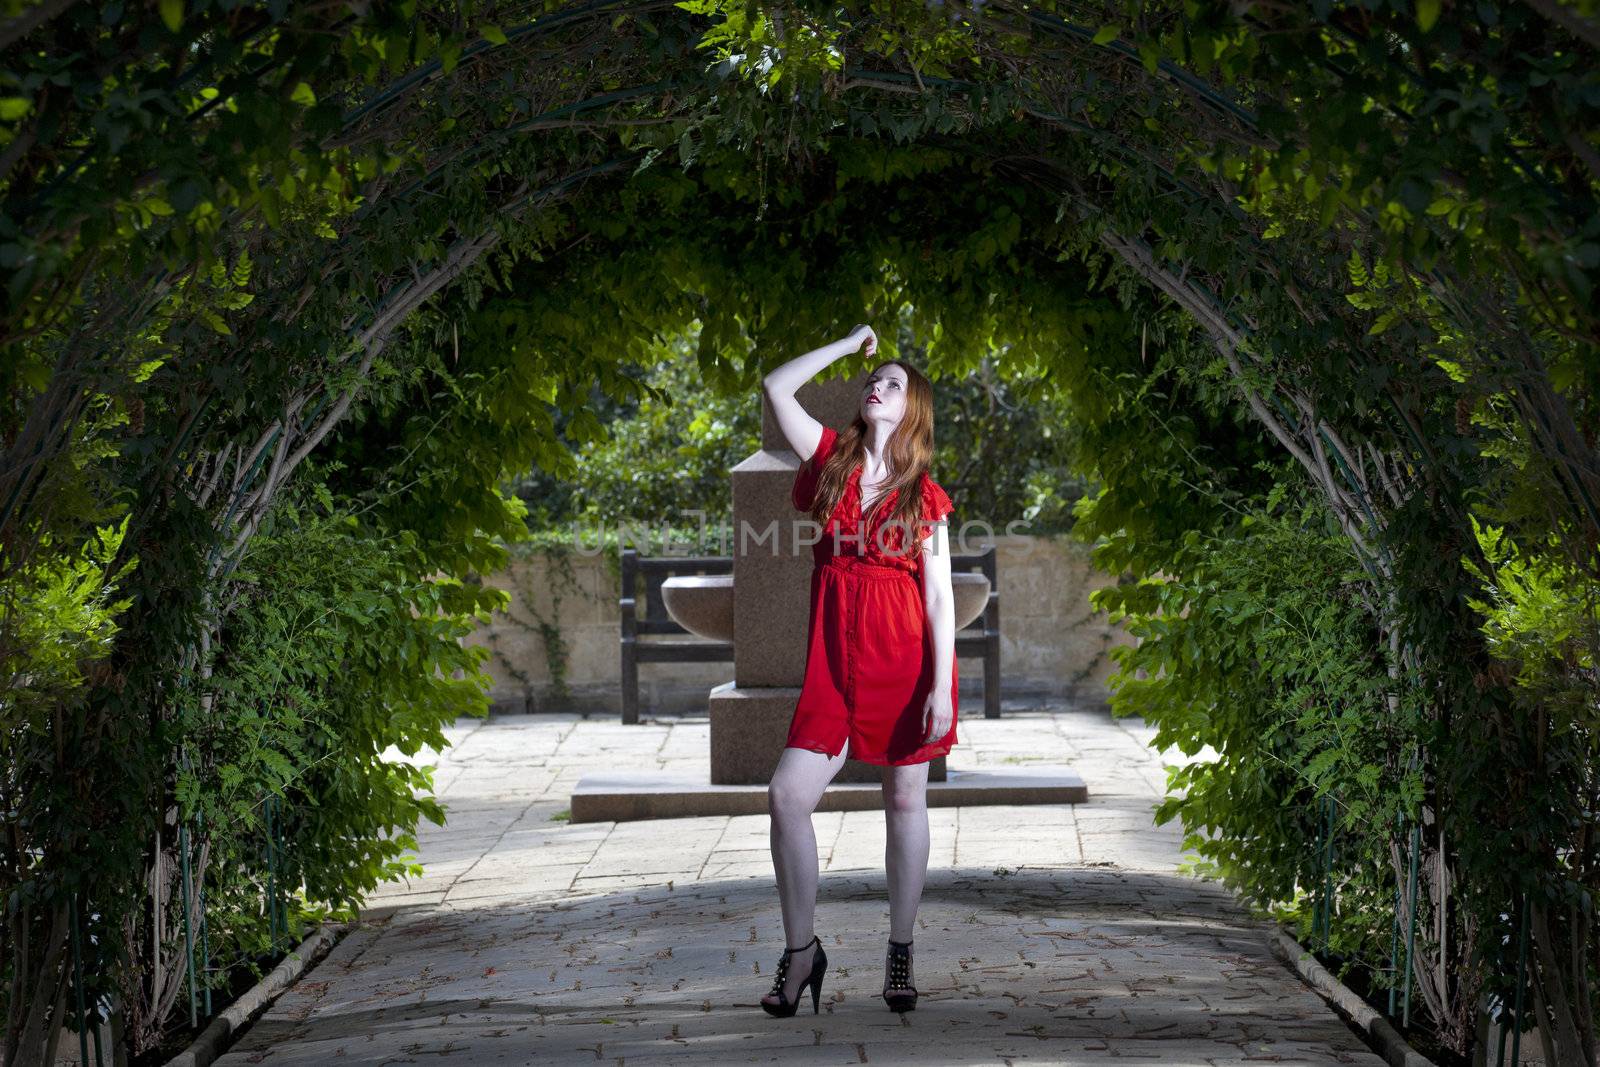 Garden Arches by PhotoWorks